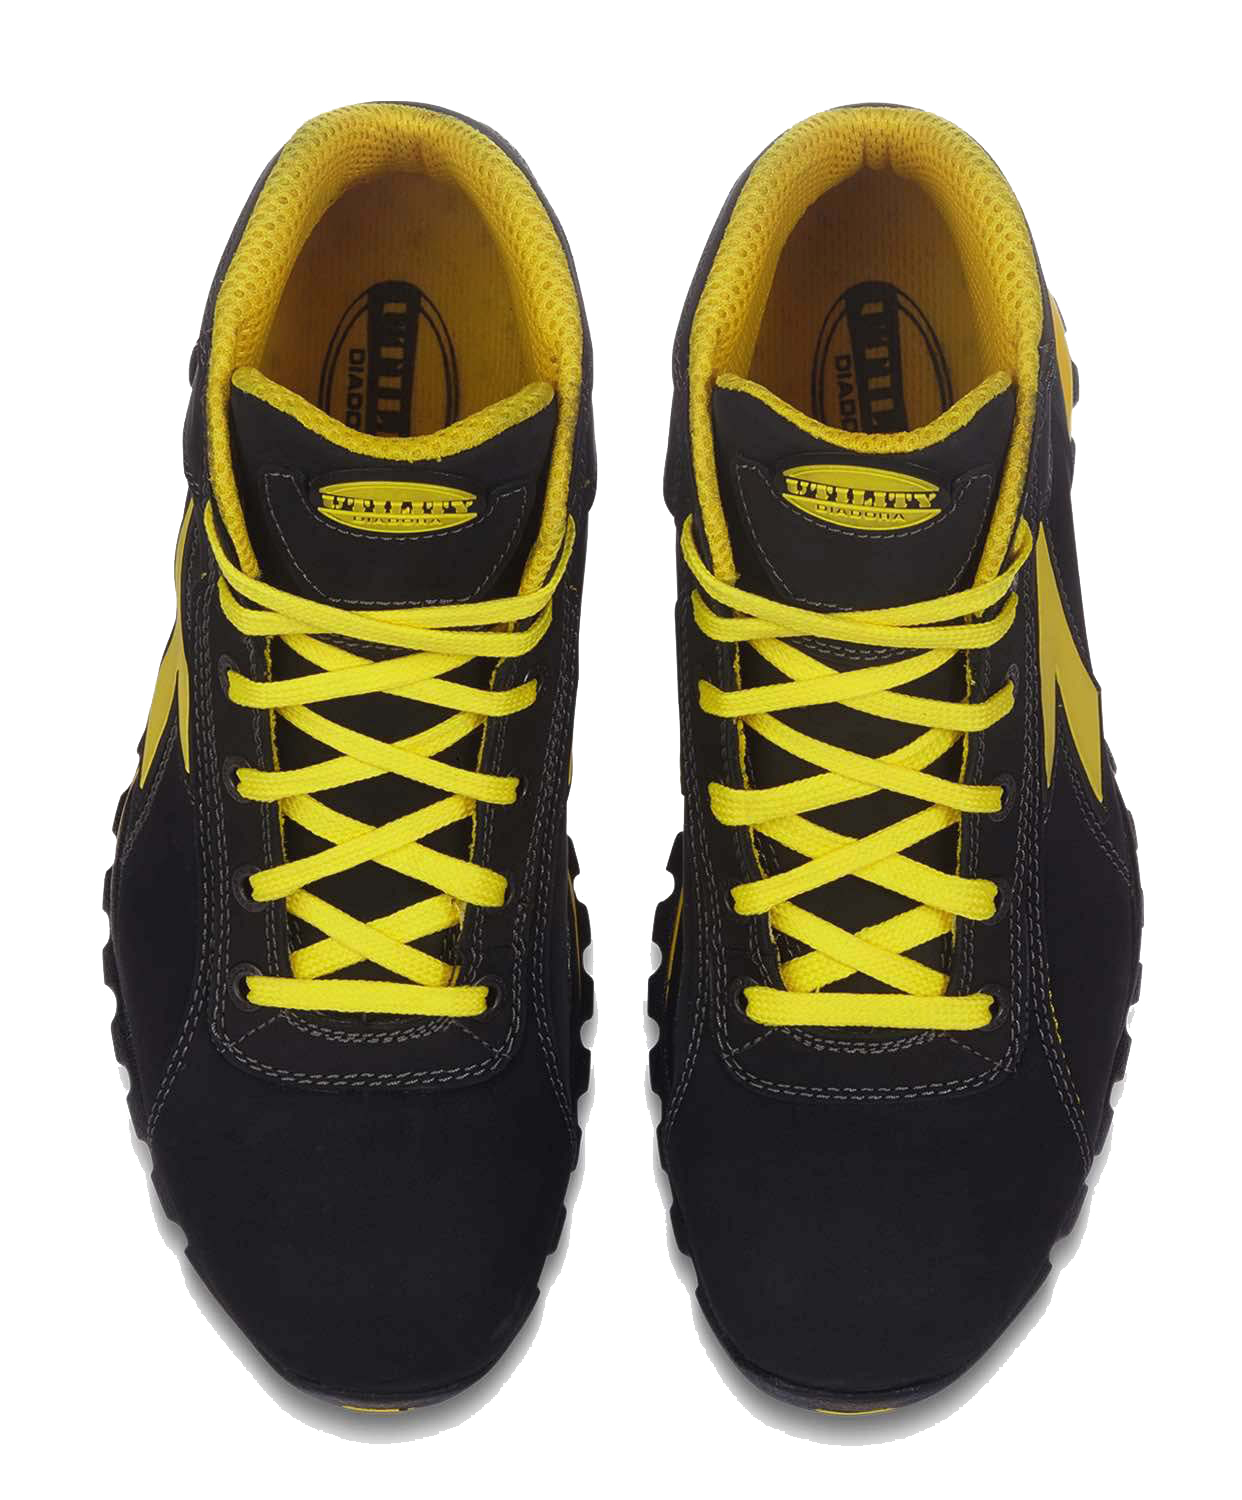 Chaussures de sécurité hautes GLOVE II HIGH S3 SRA HRO noir/jaune P36 - DIADORA SPA - 701.170234